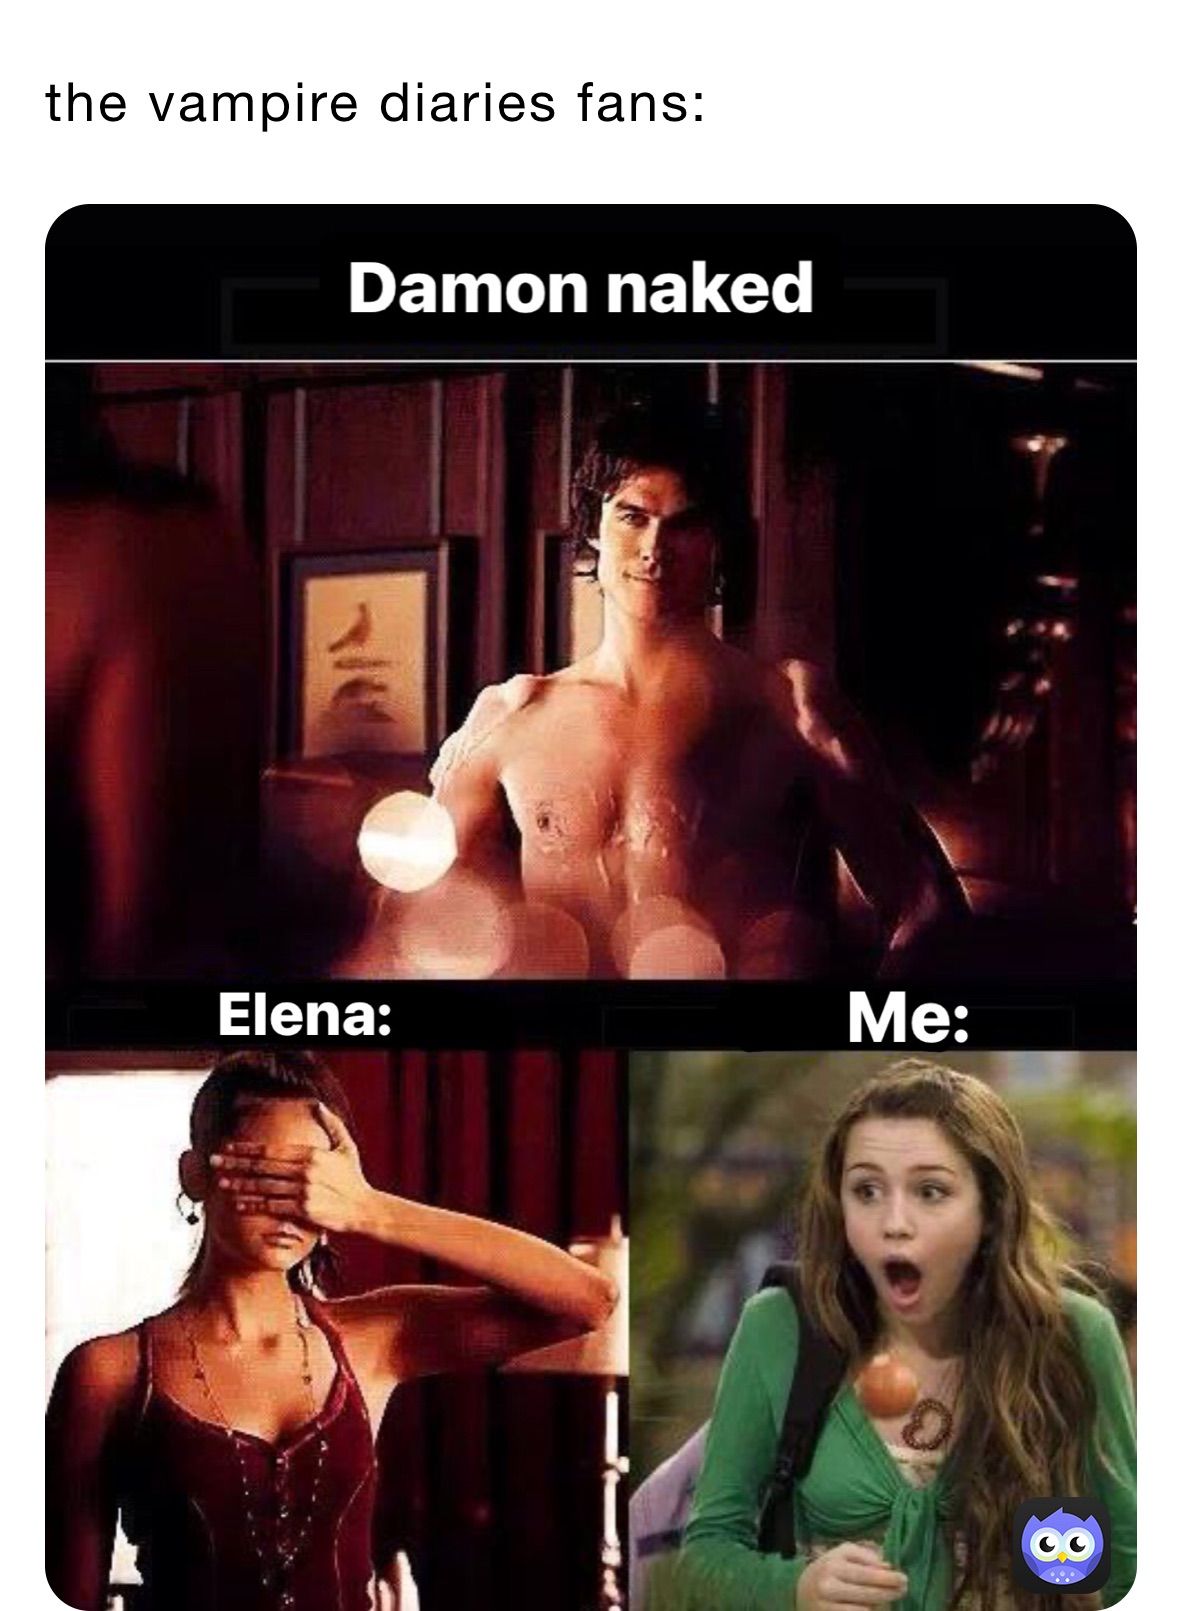 Damon meme the fans love shirtless Damon